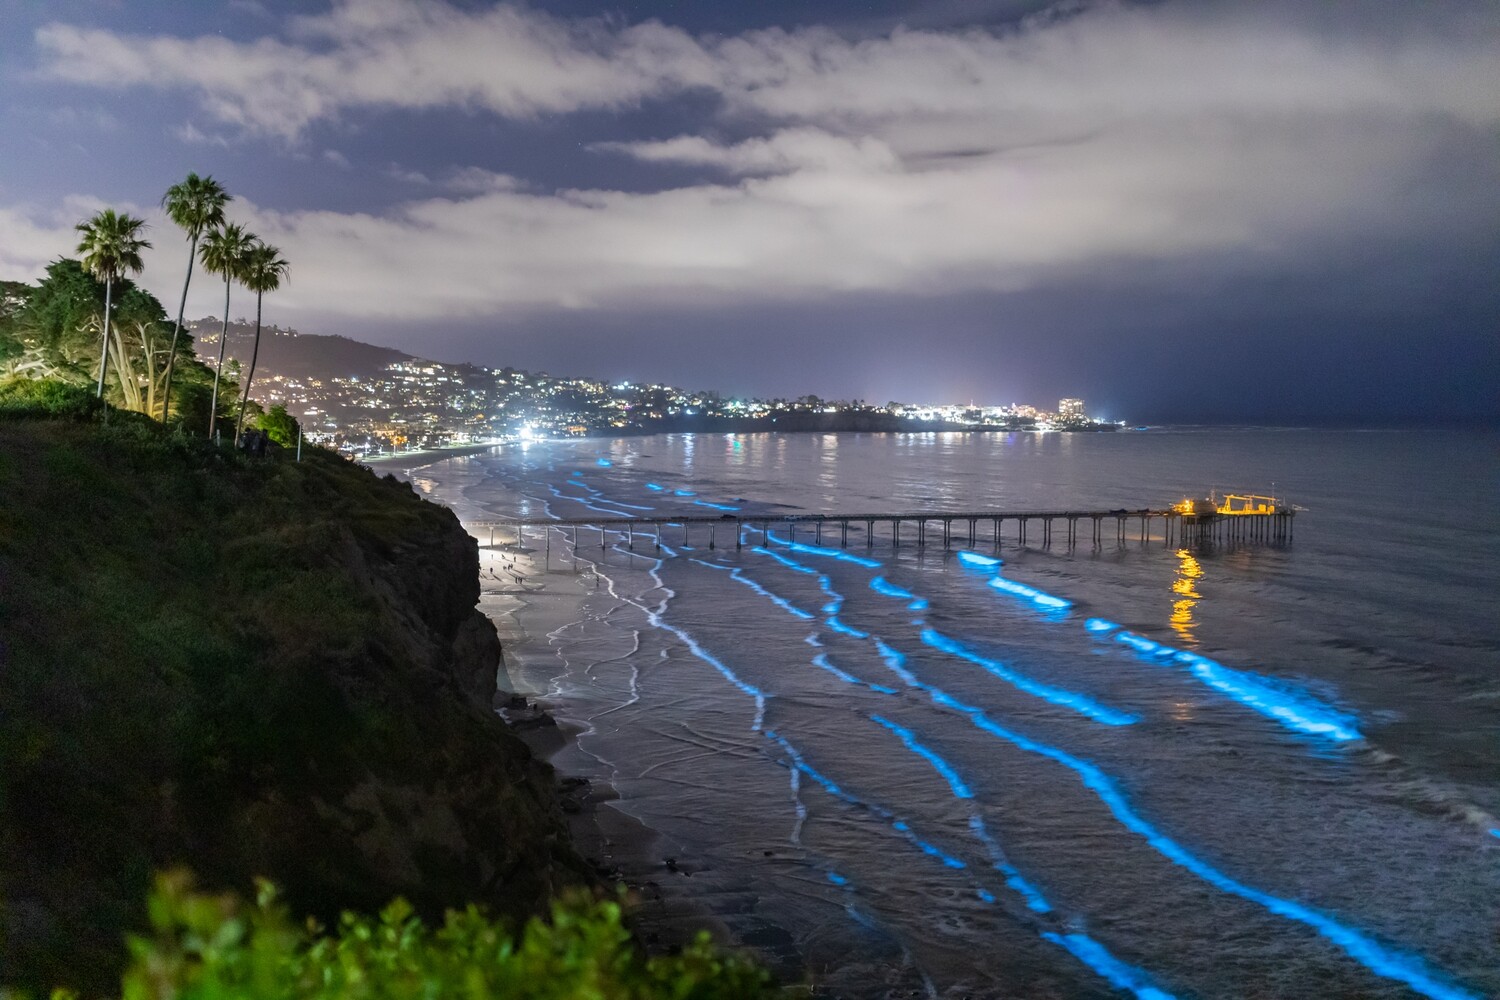 Signed Print | "Scripps Coast Bioluminescence"